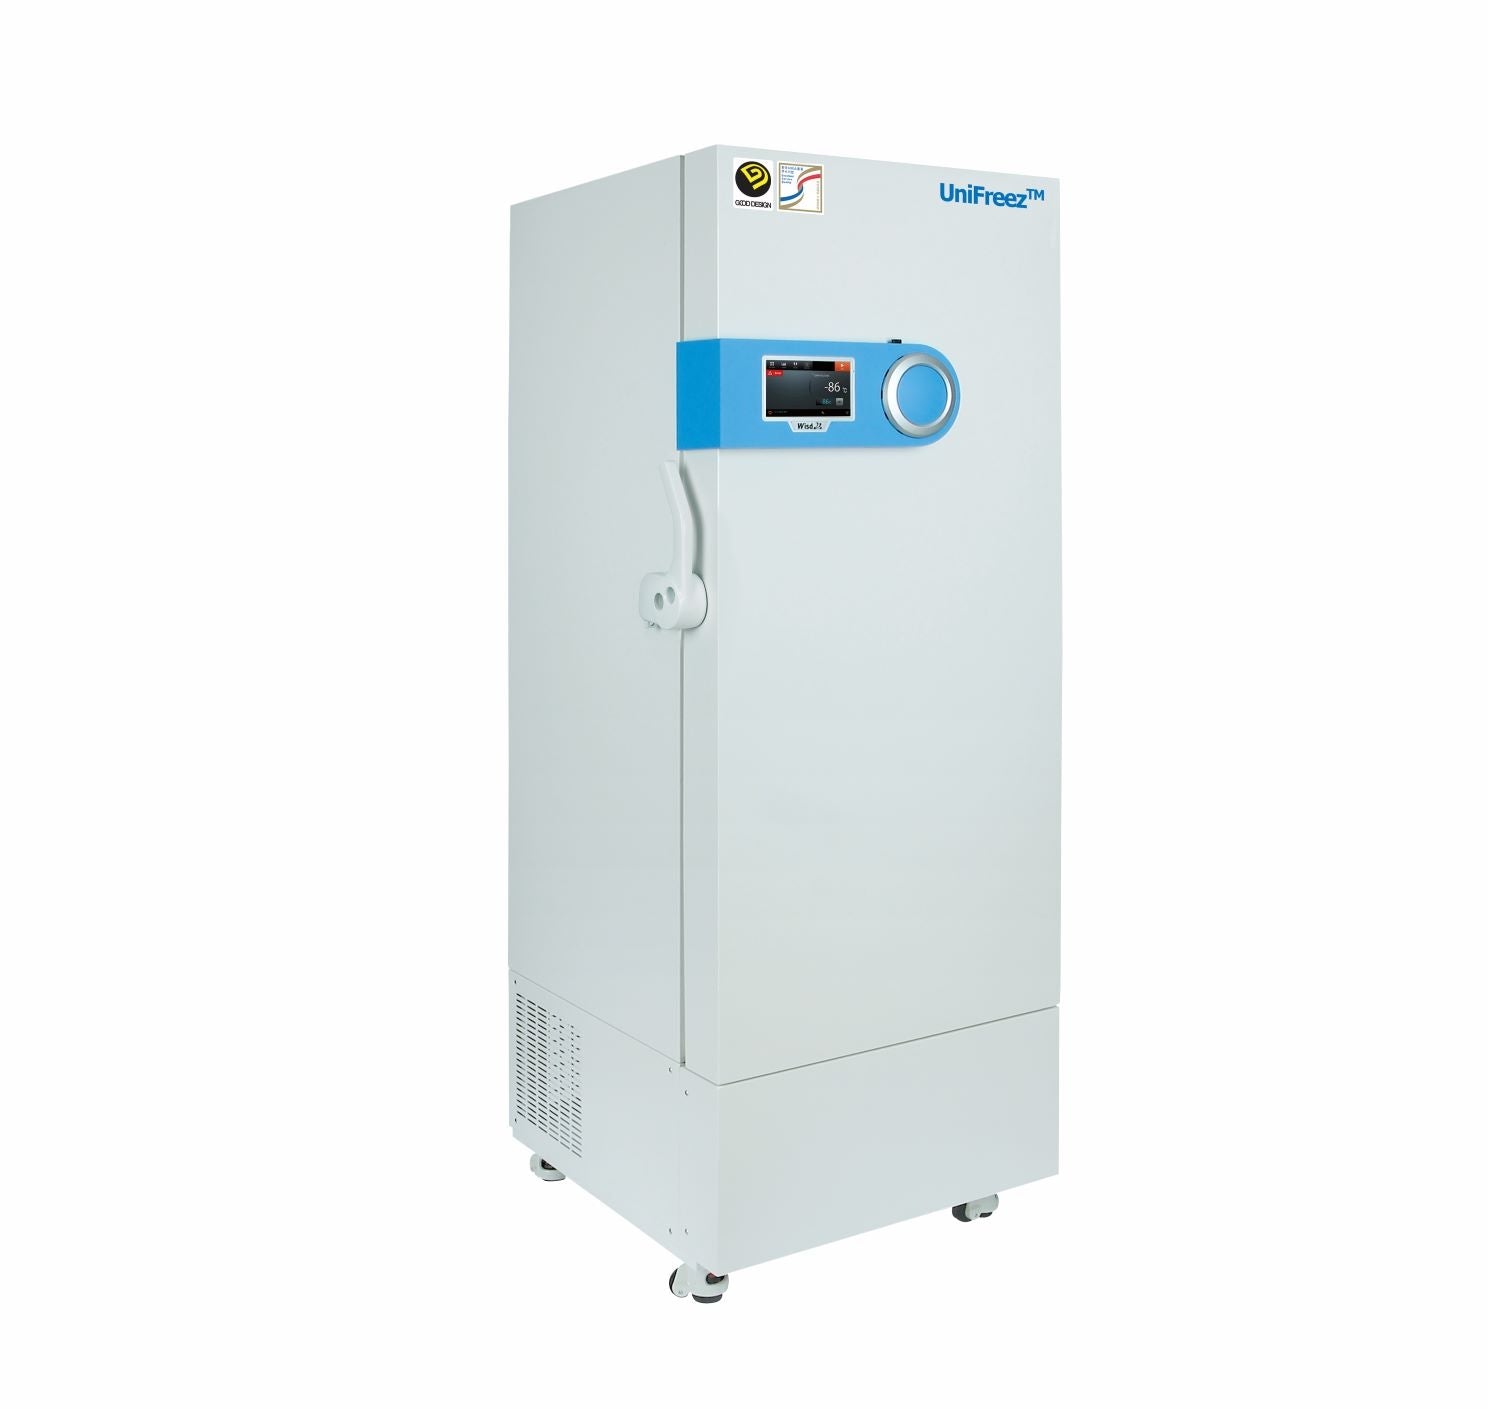 Freezer UniFreez FRE700-96 Smart ULT -86ºC, 5 doors 700L, 230V